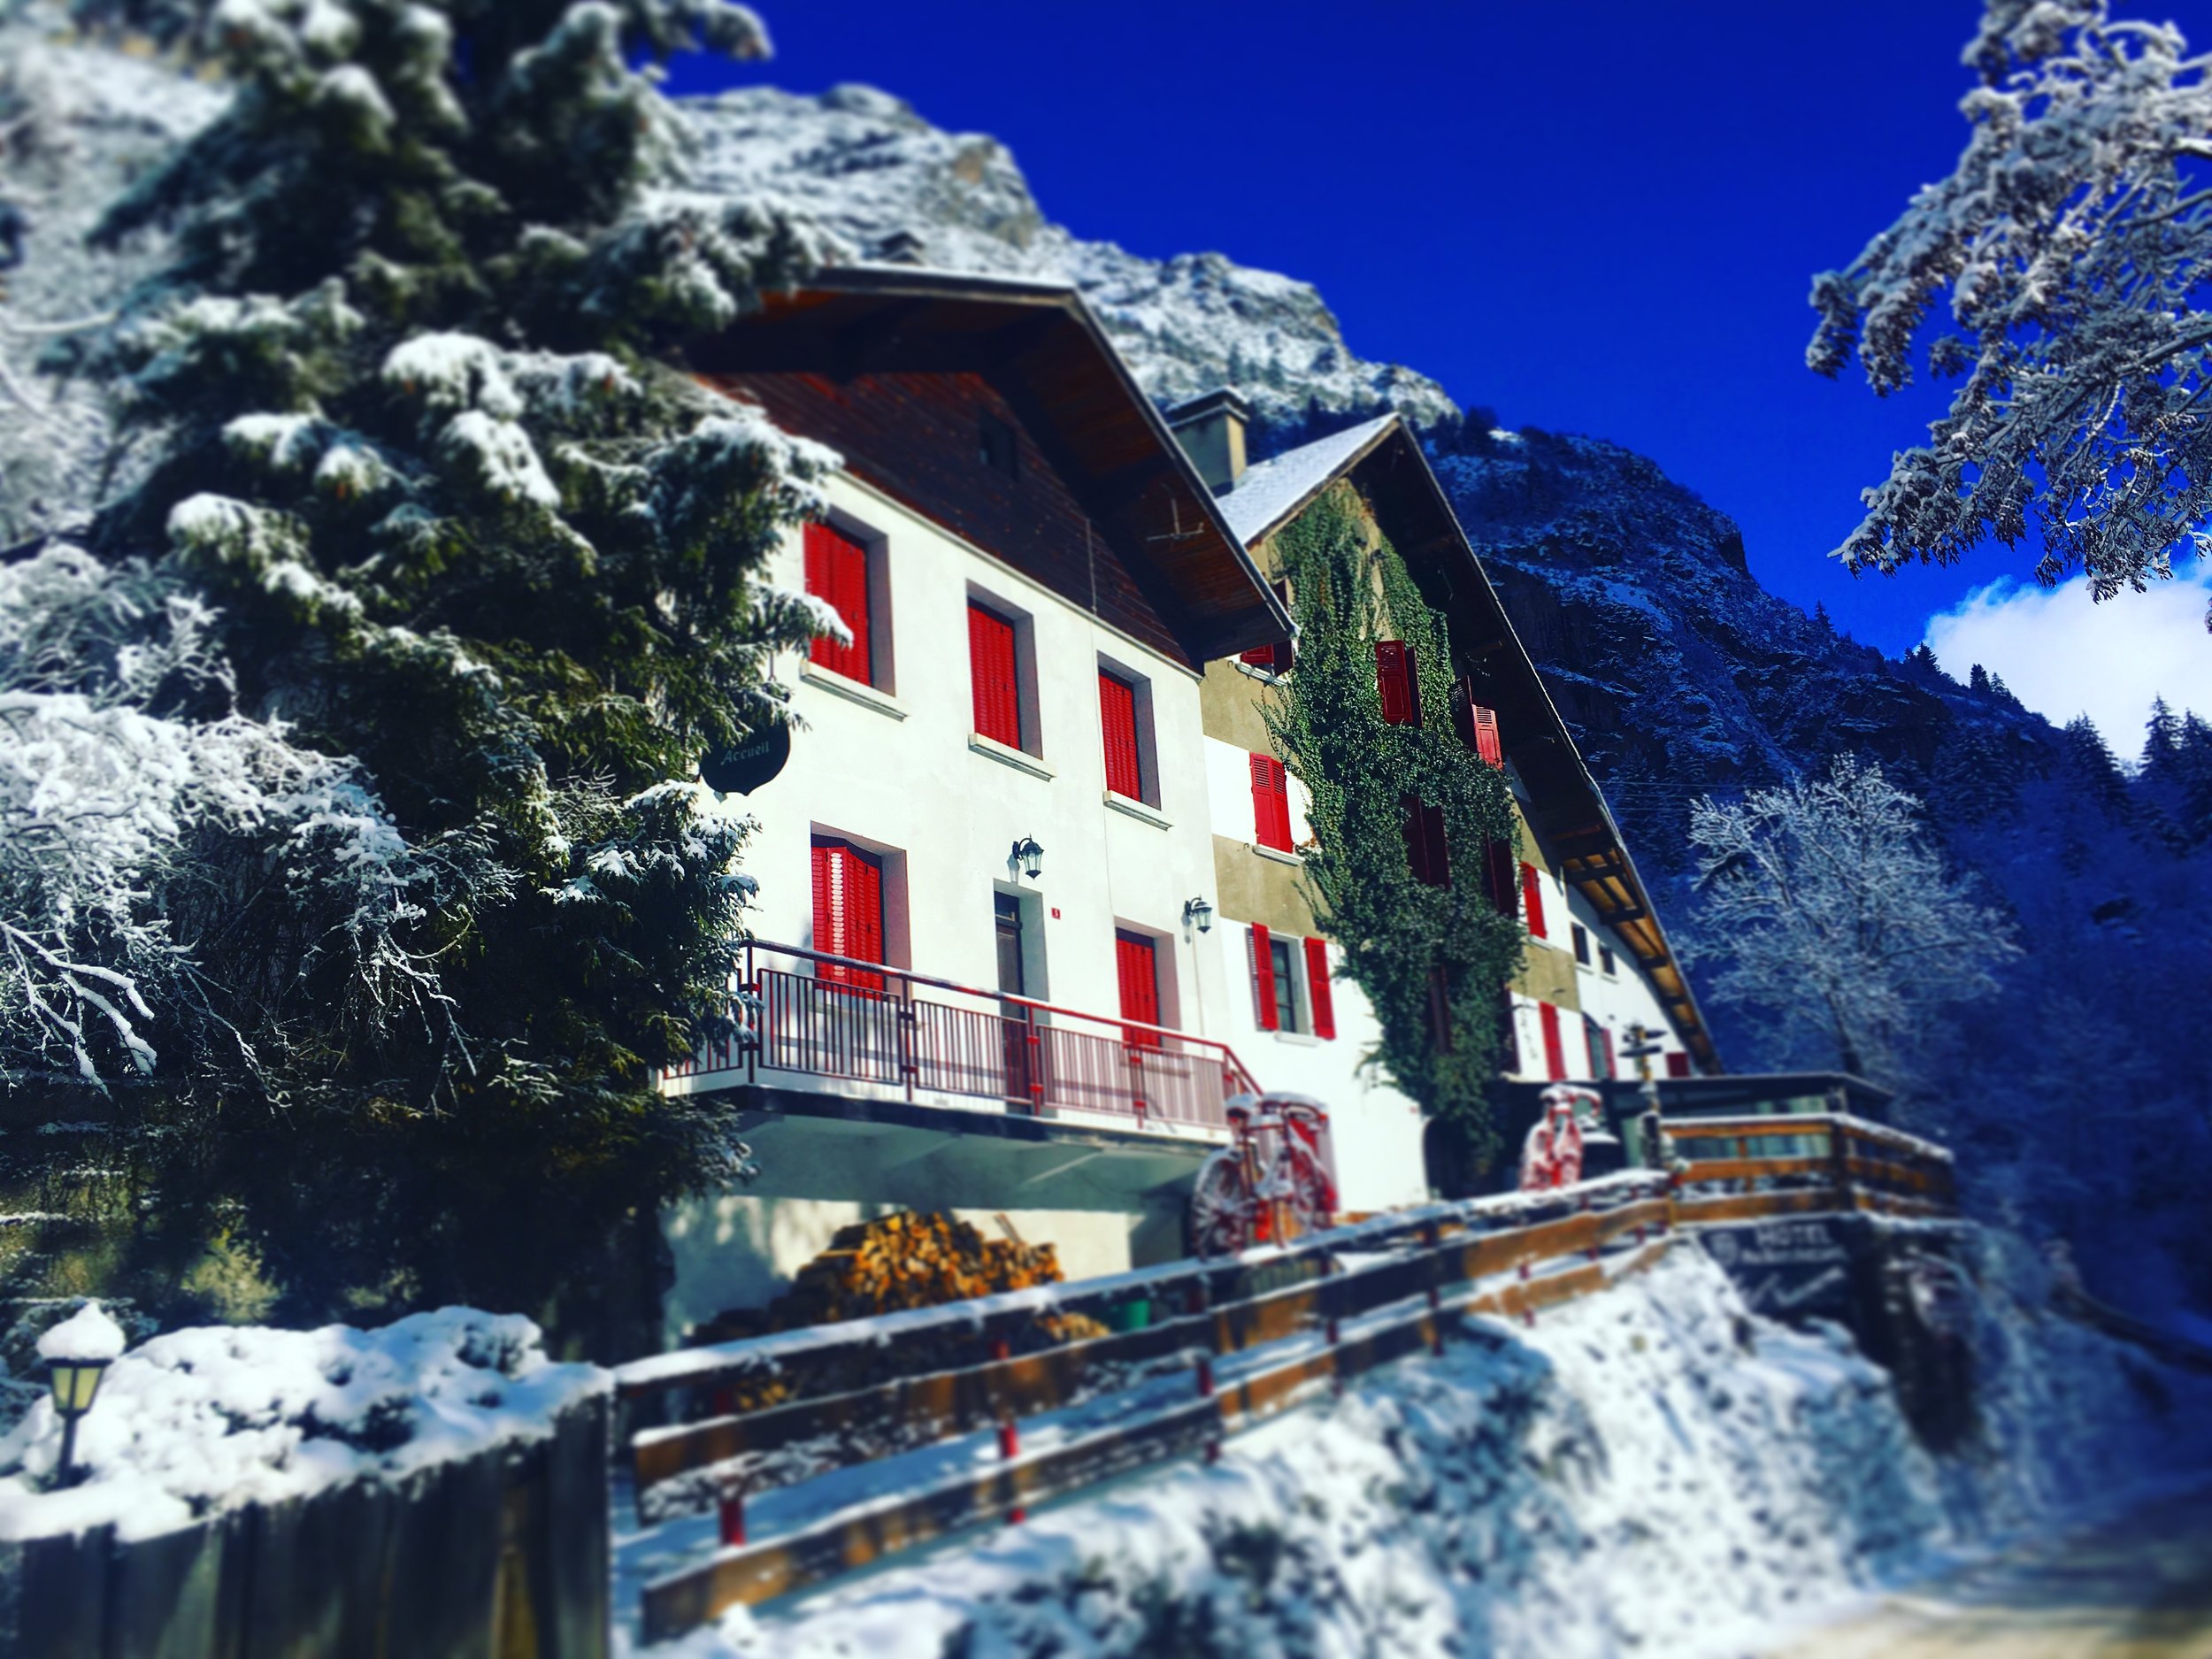  Hotel Au Bon Accueil   Hét hotel in de Franse Alpen    BEKIJK NU ONZE BESCHIKBAARHEID  